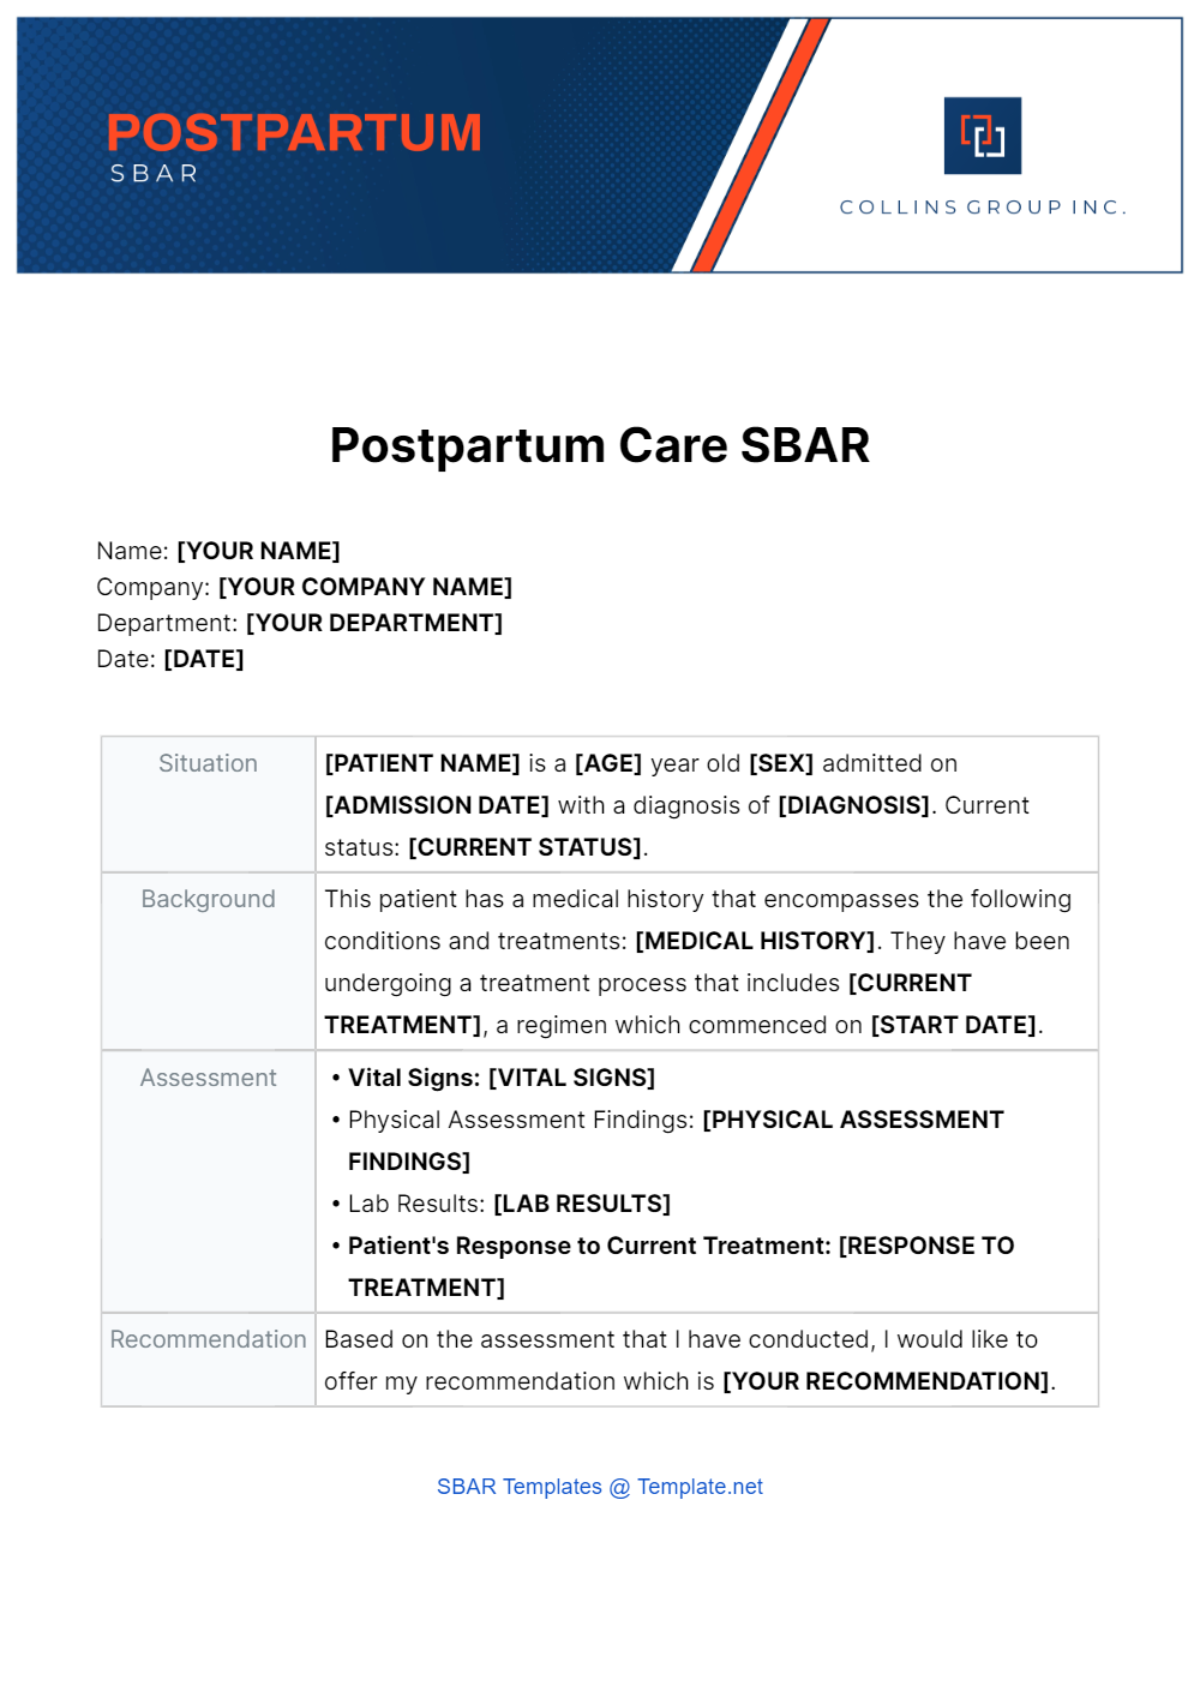 Free Postpartum Care SBAR Template